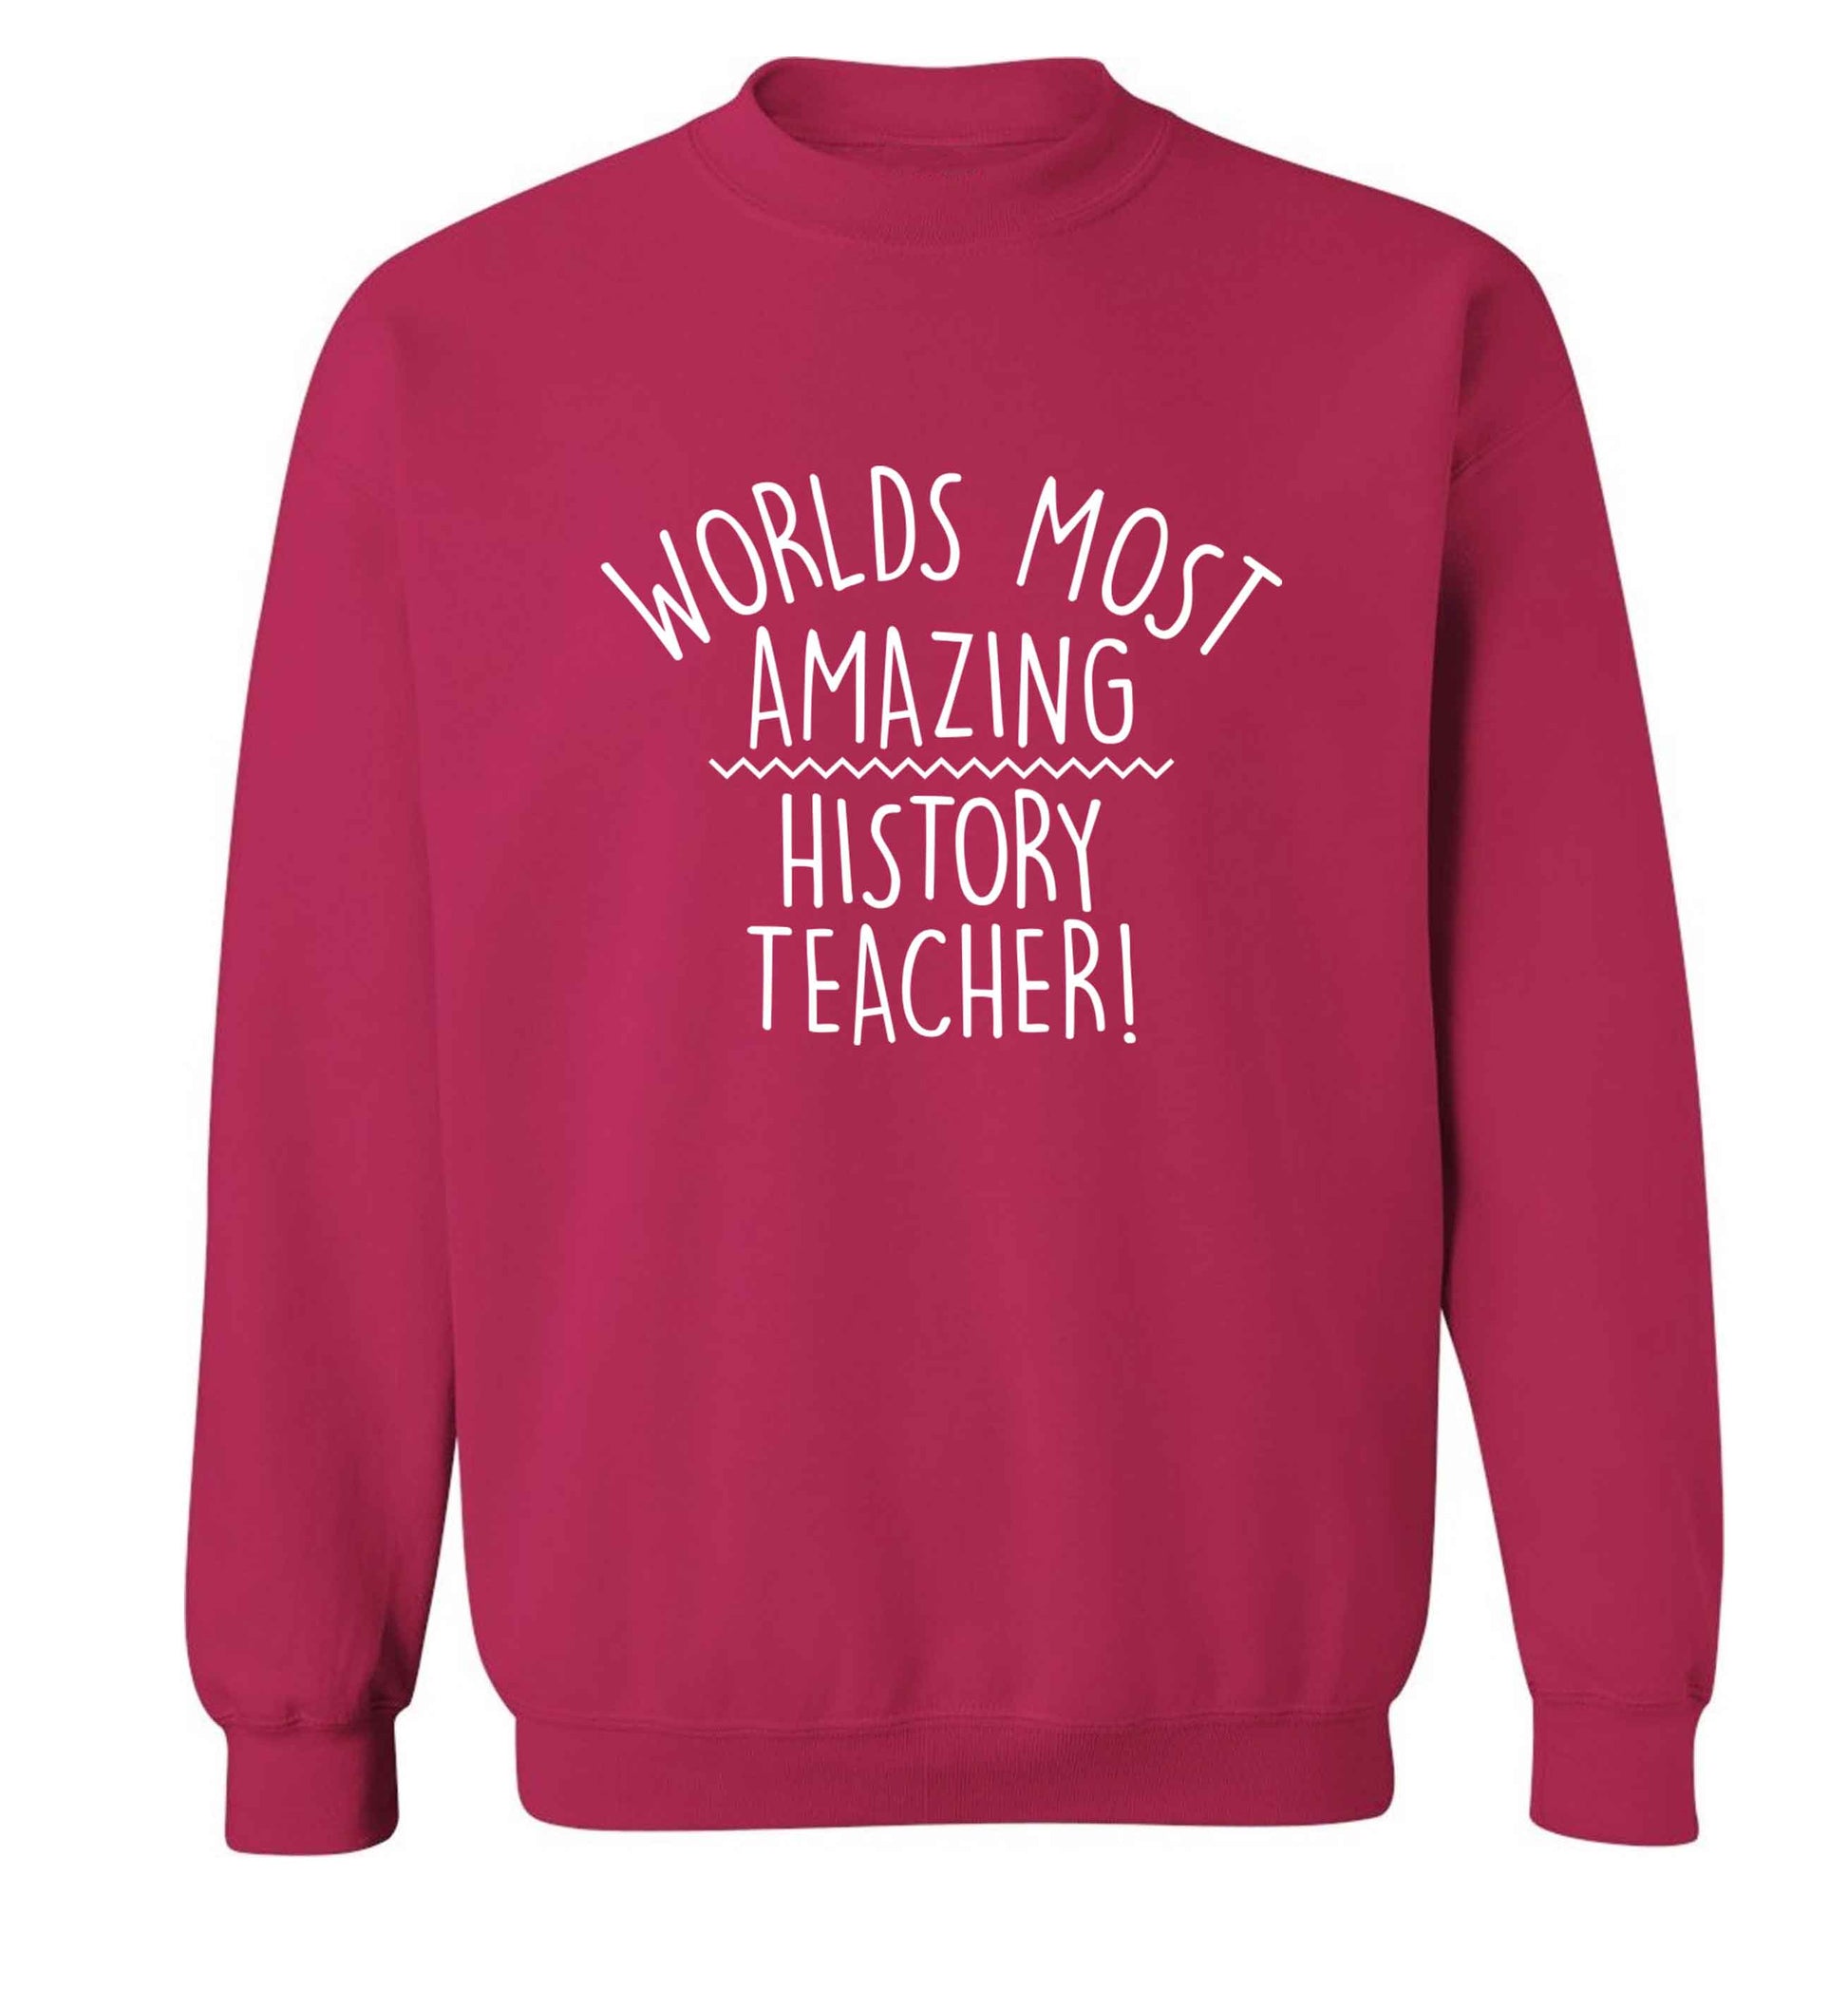 Worlds most amazing History teacher adult's unisex pink sweater 2XL